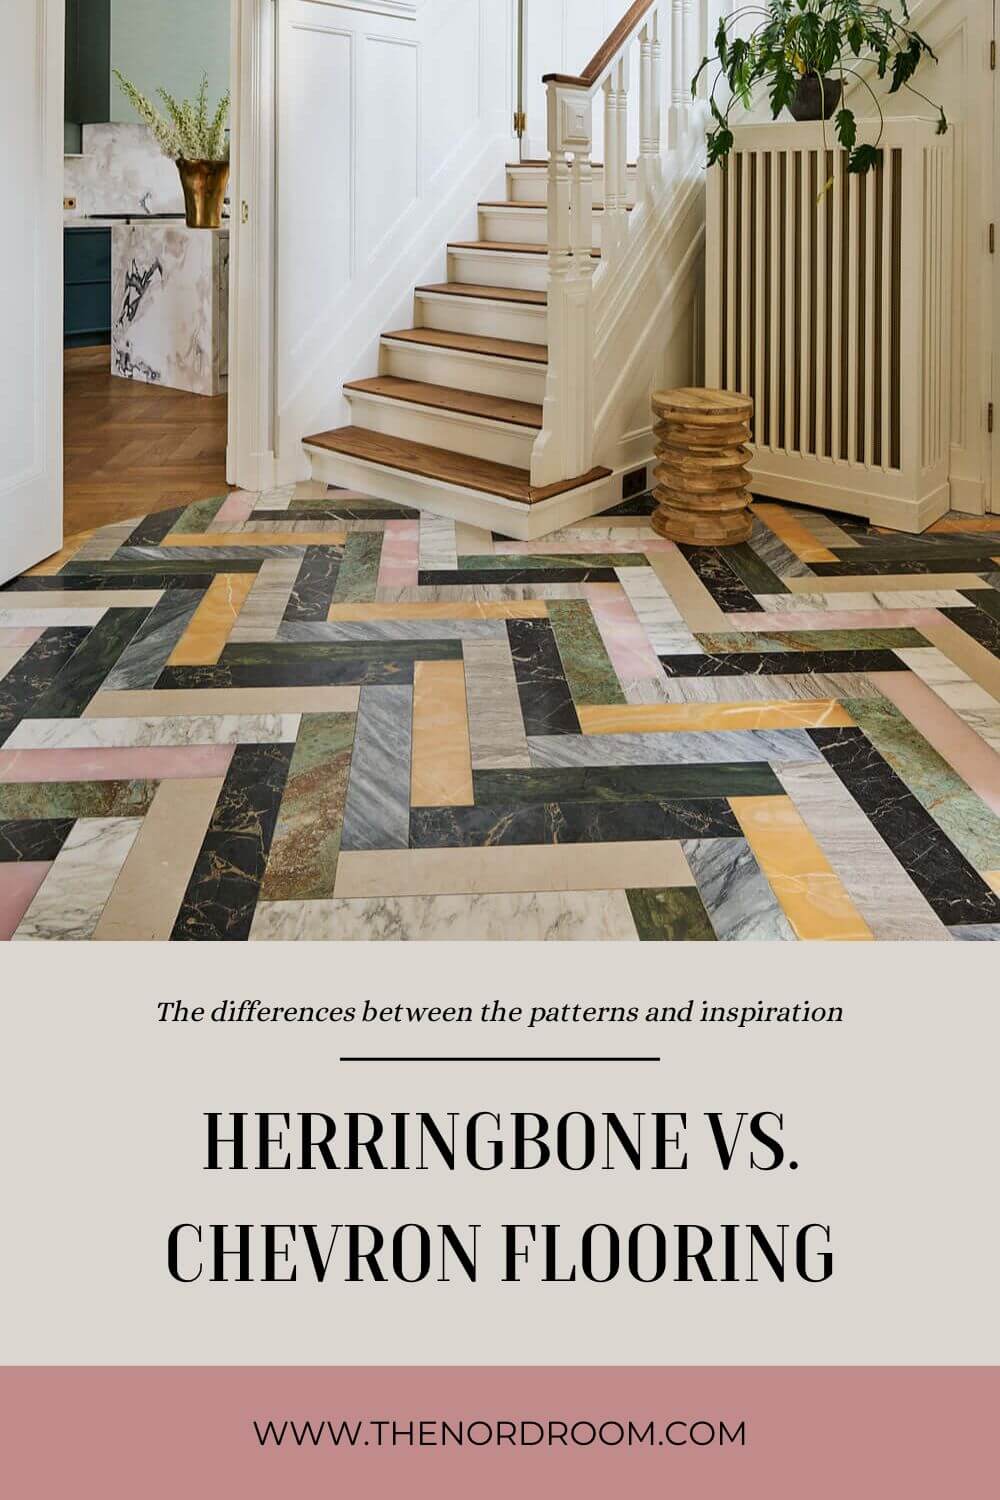 herringbone-vs.-chevron-flooring-nordroom